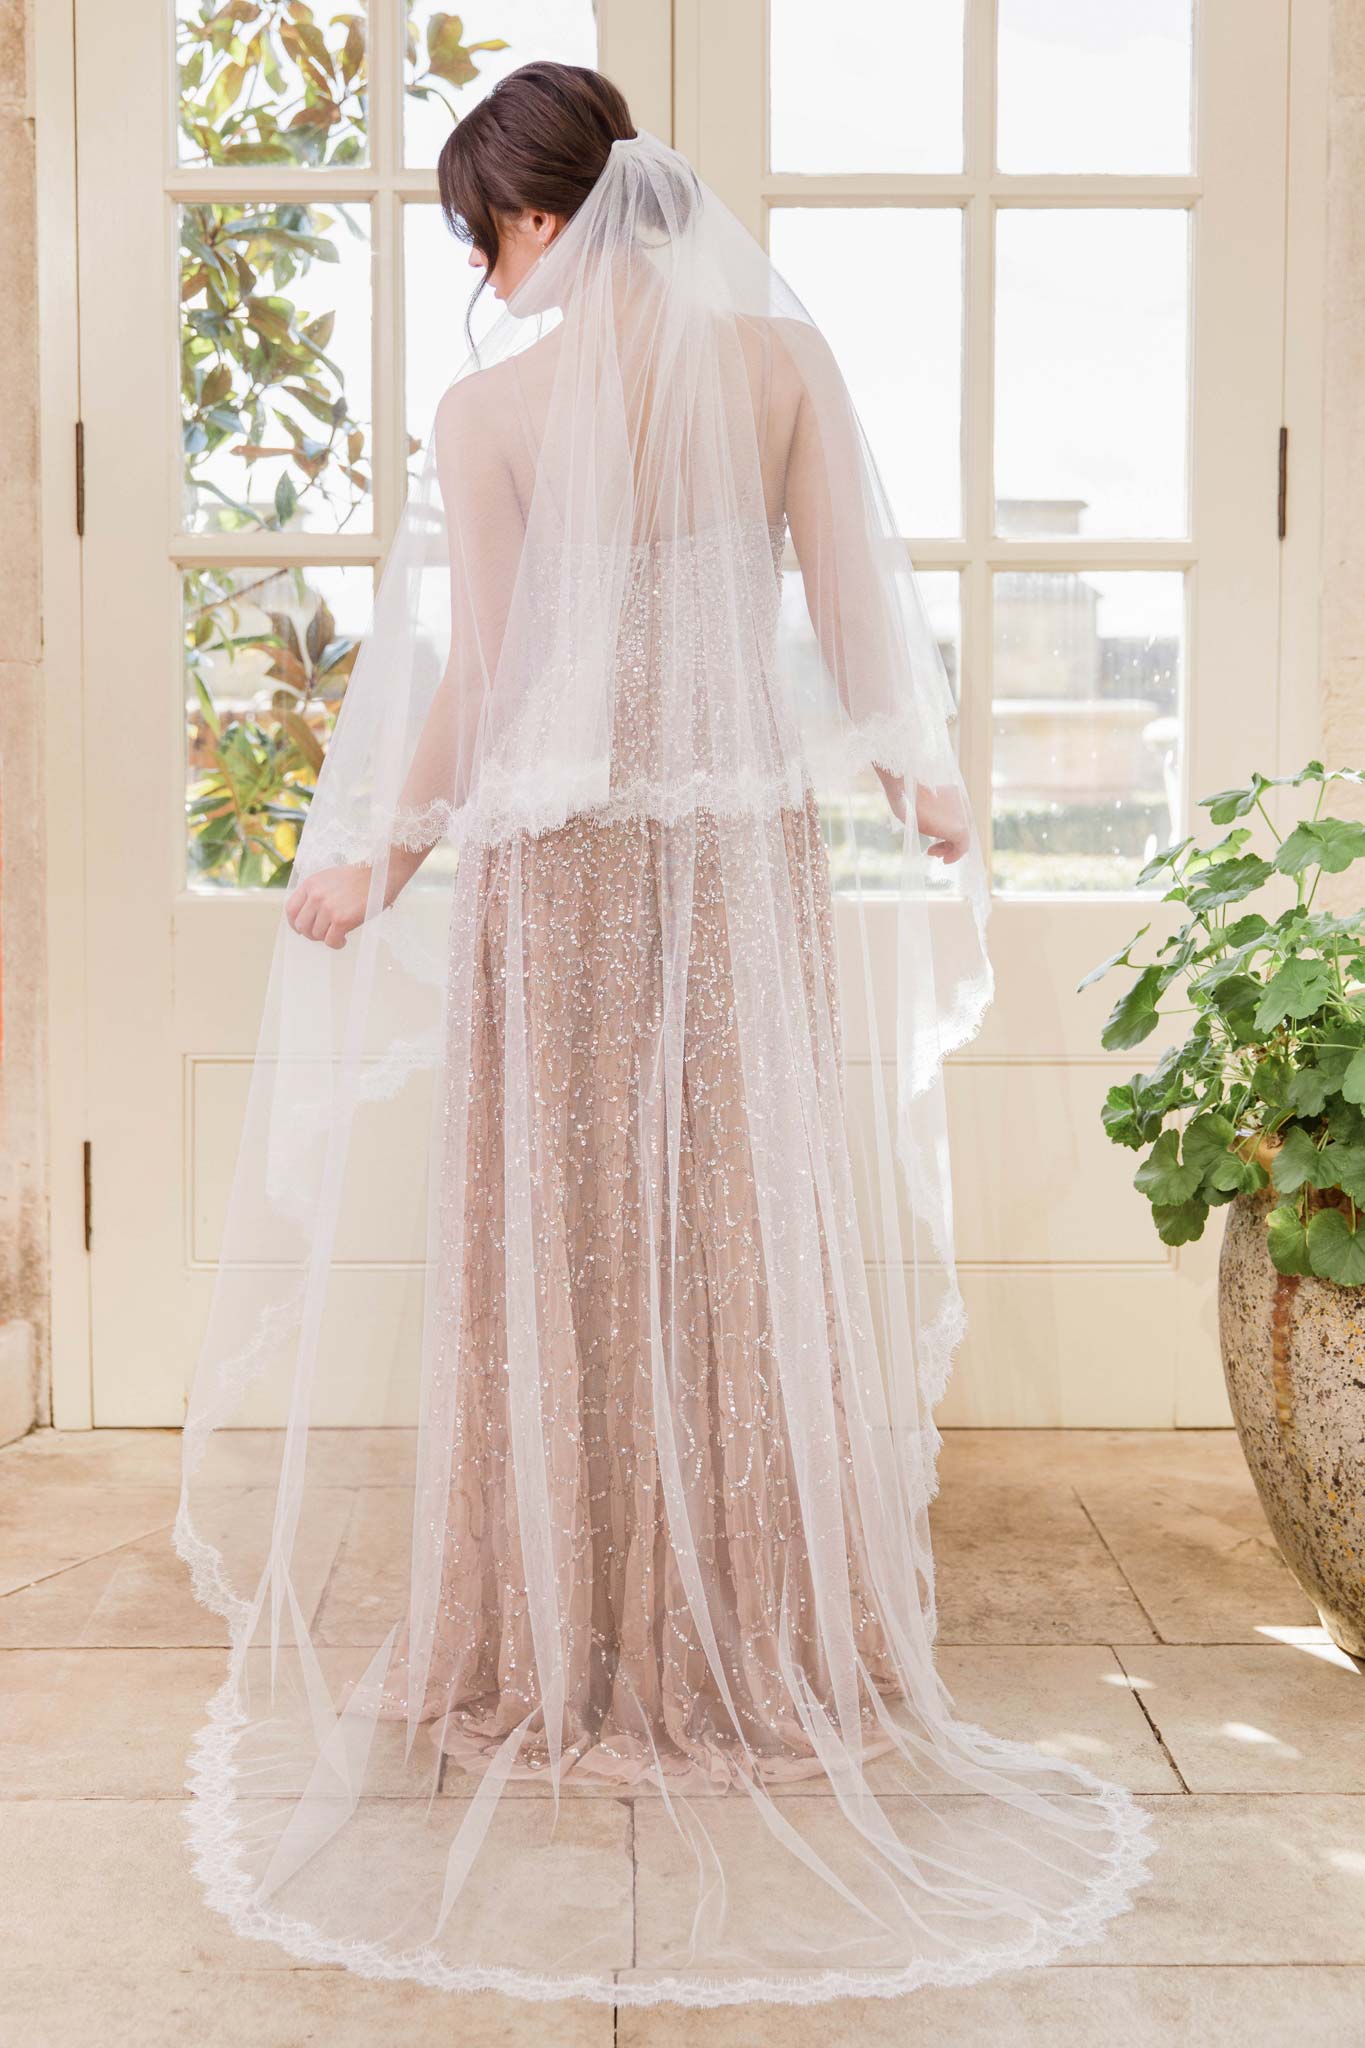 Wedding Veil Two Tier Silk Style Wedding Veil With French Eyelash Lace Trim- 'Mia'